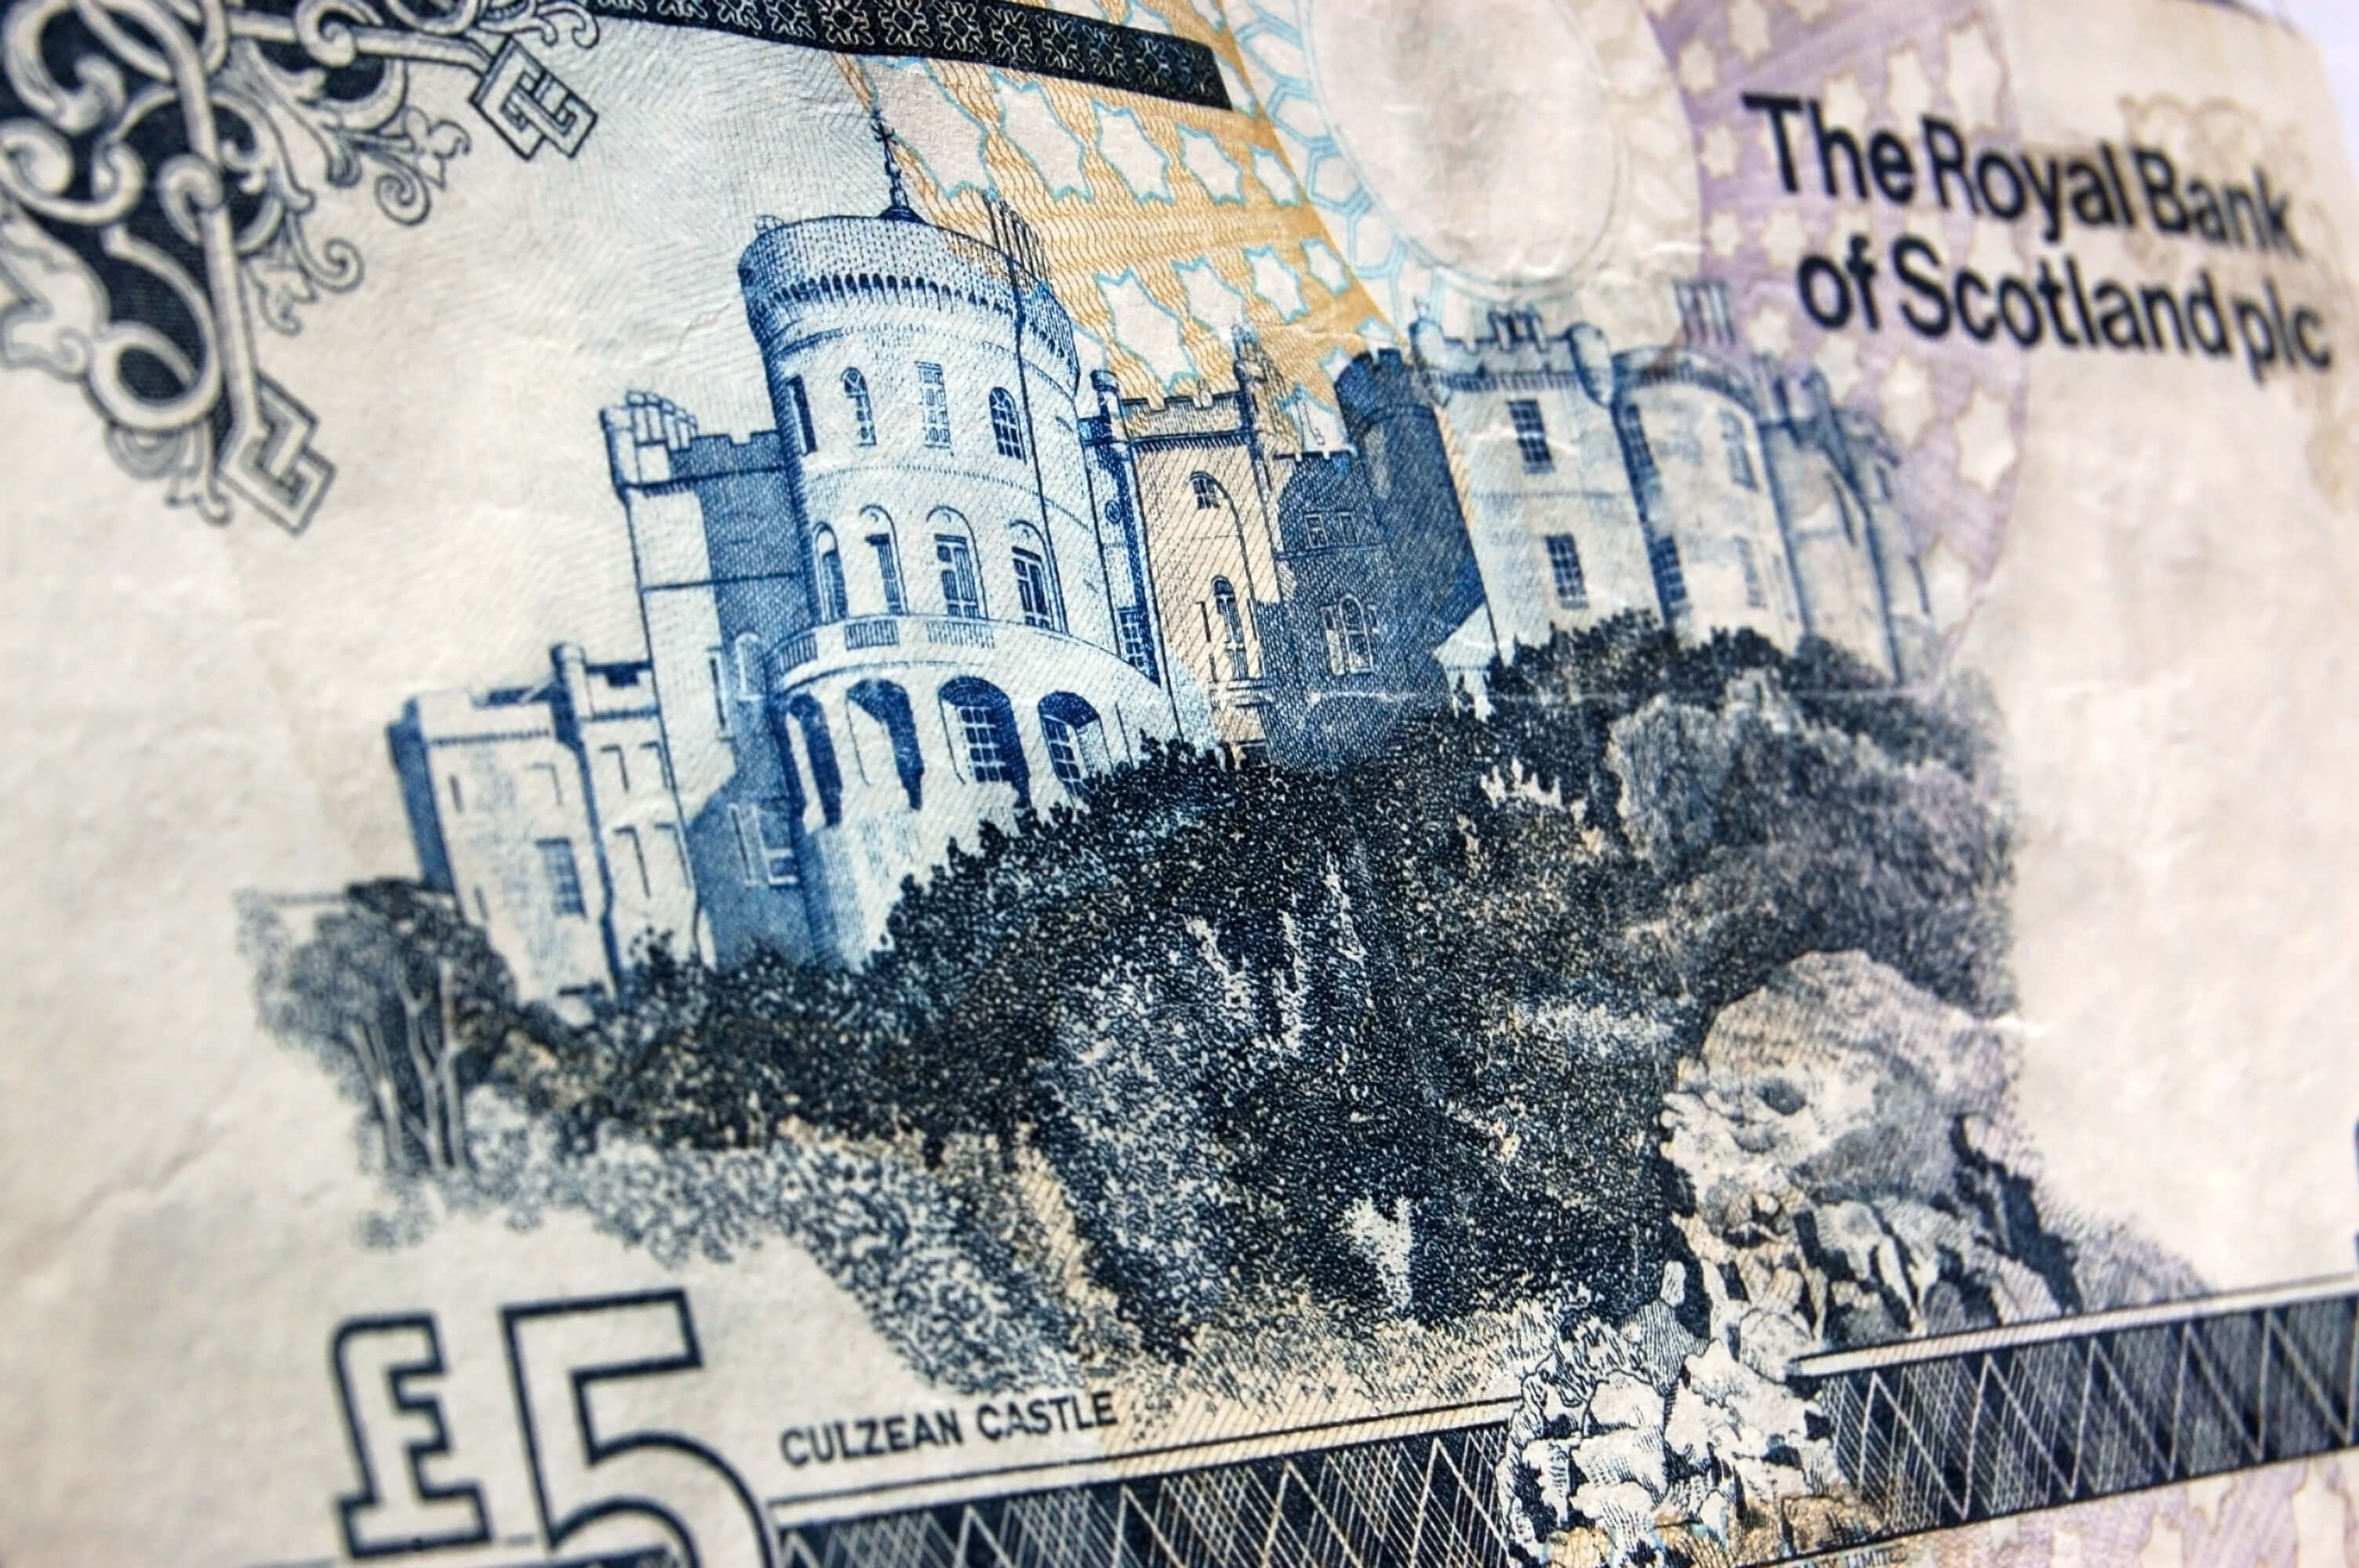 Culzean Castle banknote A five pound banknote